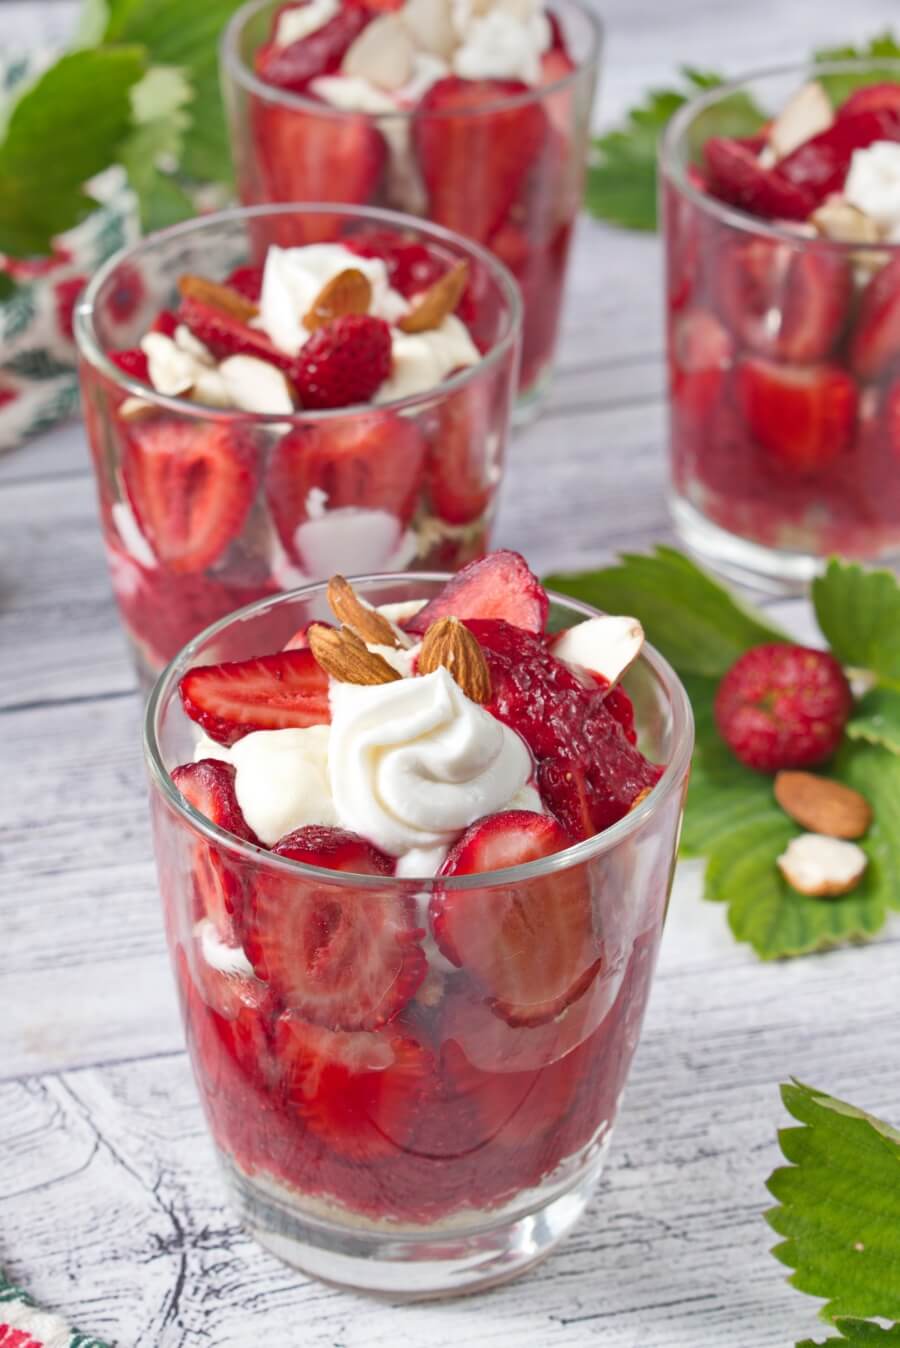 Healthy Strawberry Parfaits Recipe - Cook.me Recipes